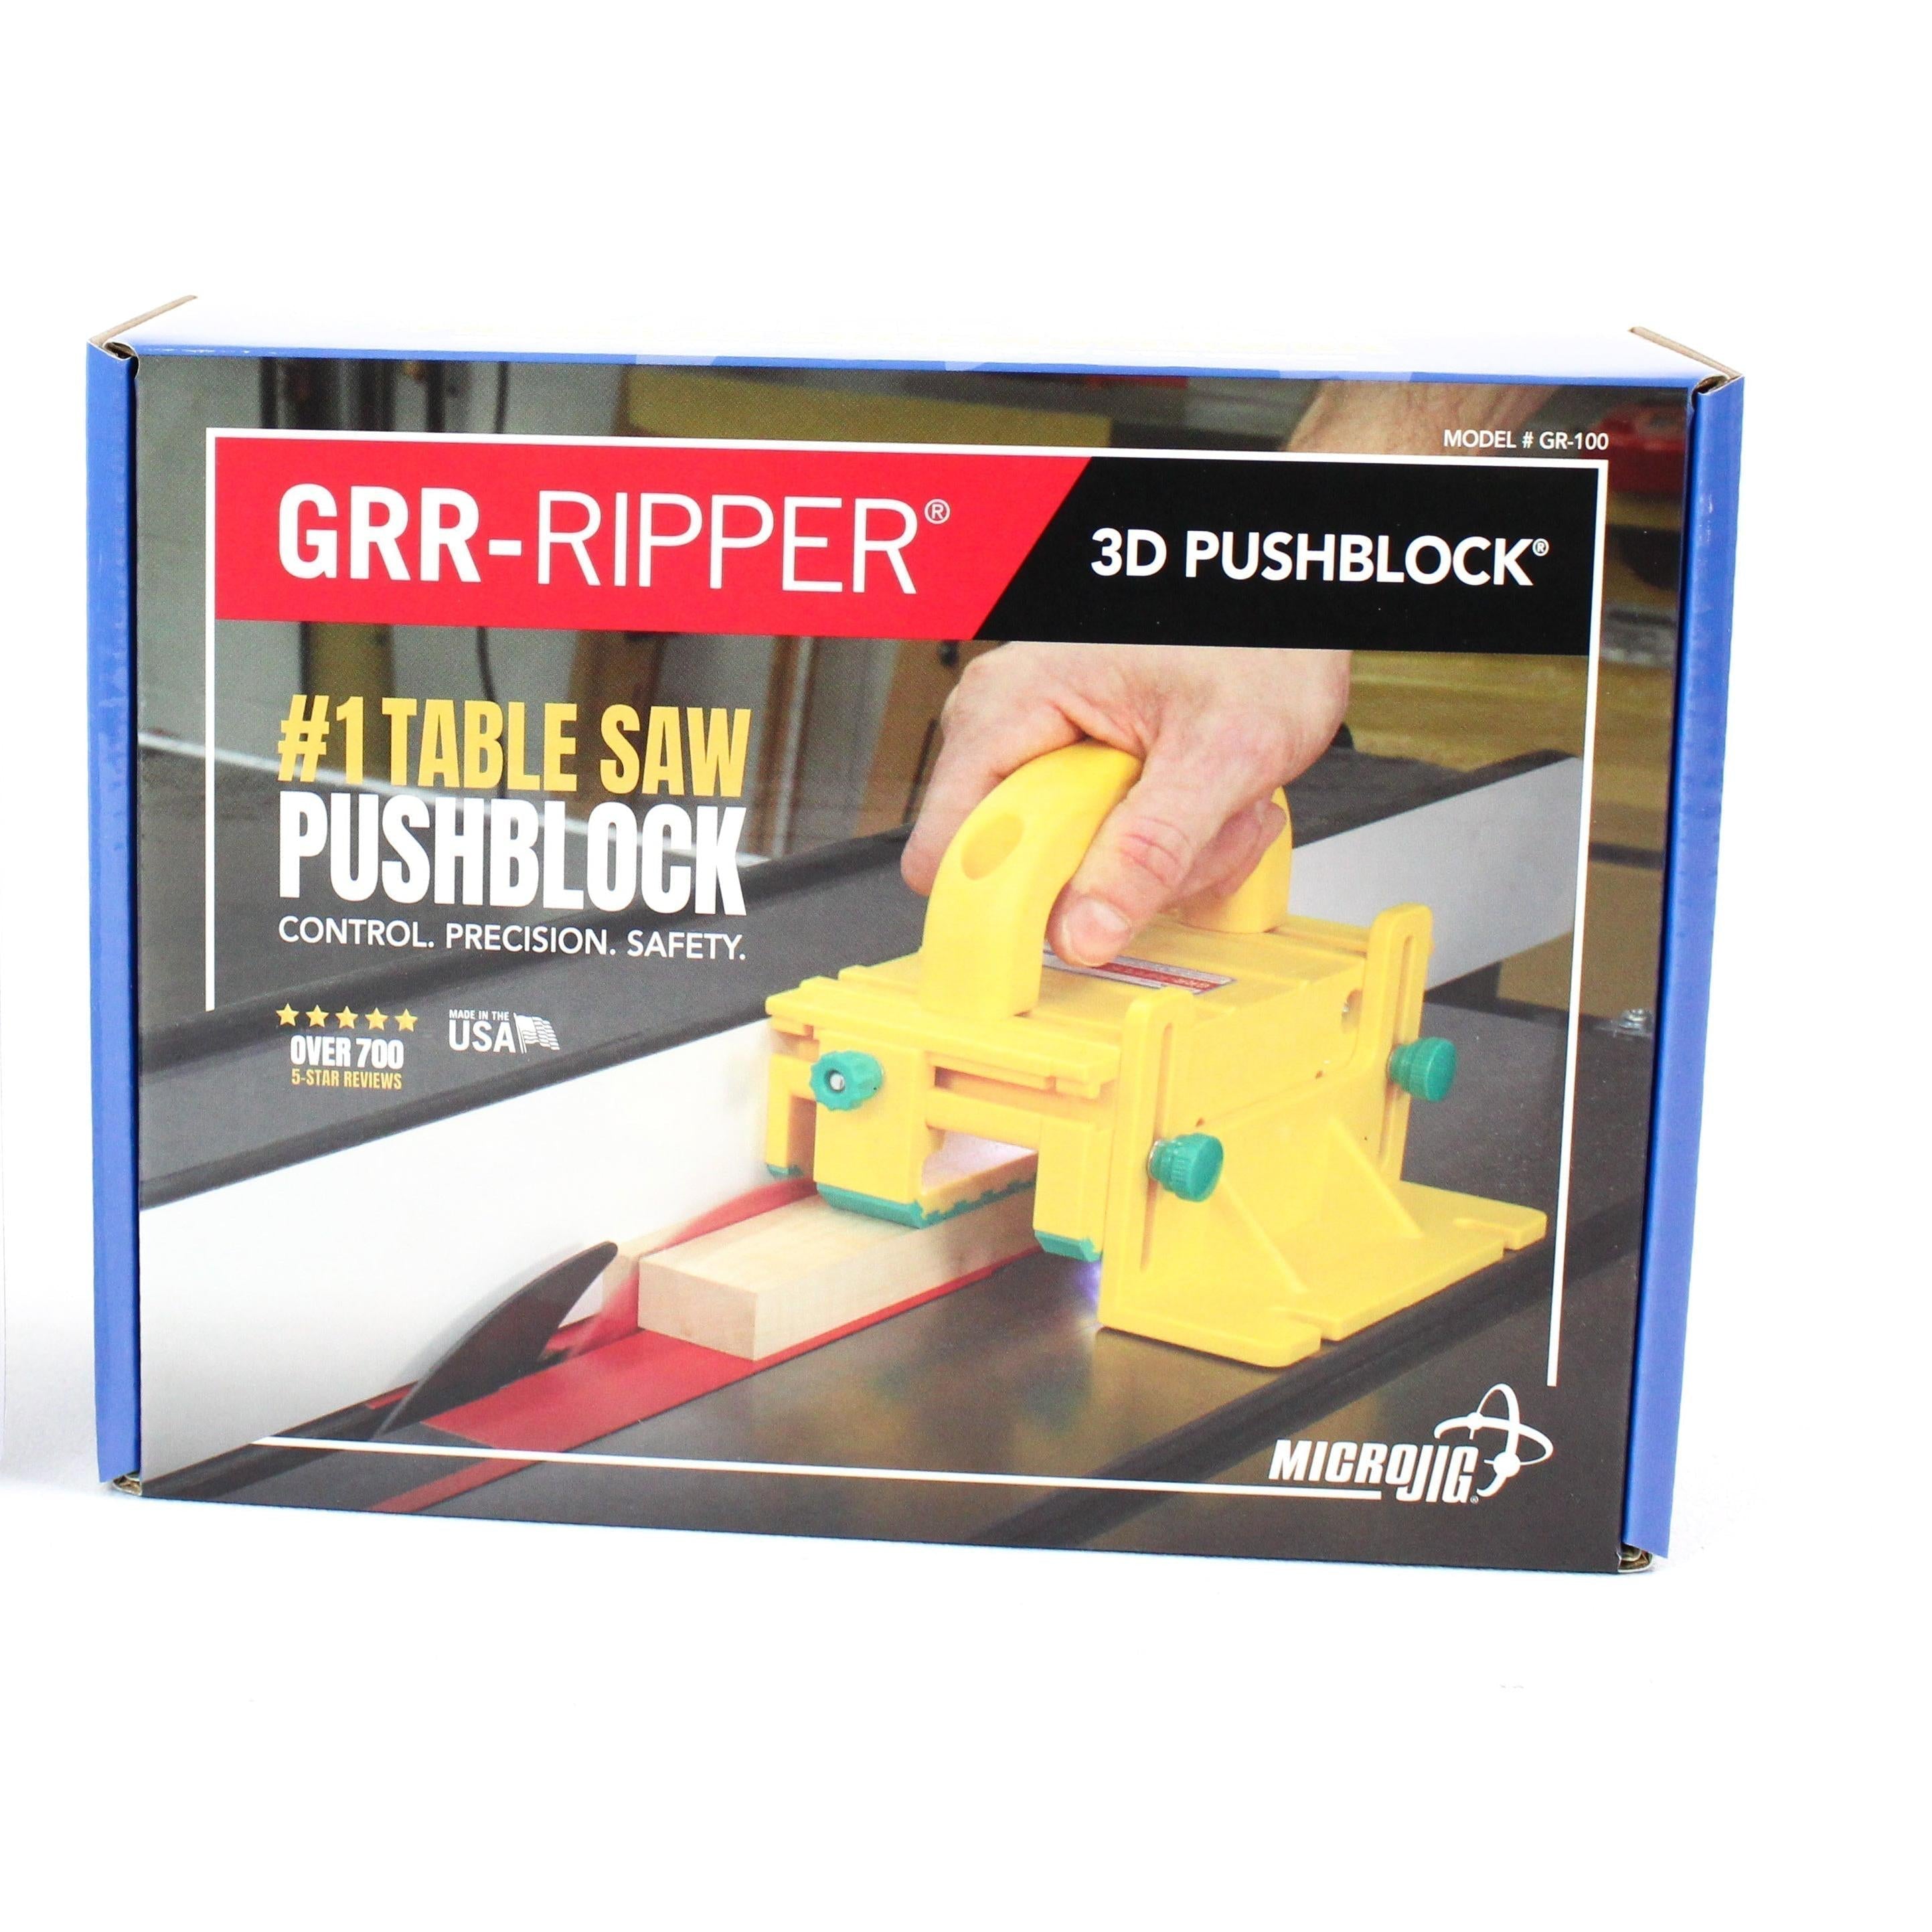 Microjig Pushblock System Grr-Ripper 3D Standard GR-100 Power Tool Services